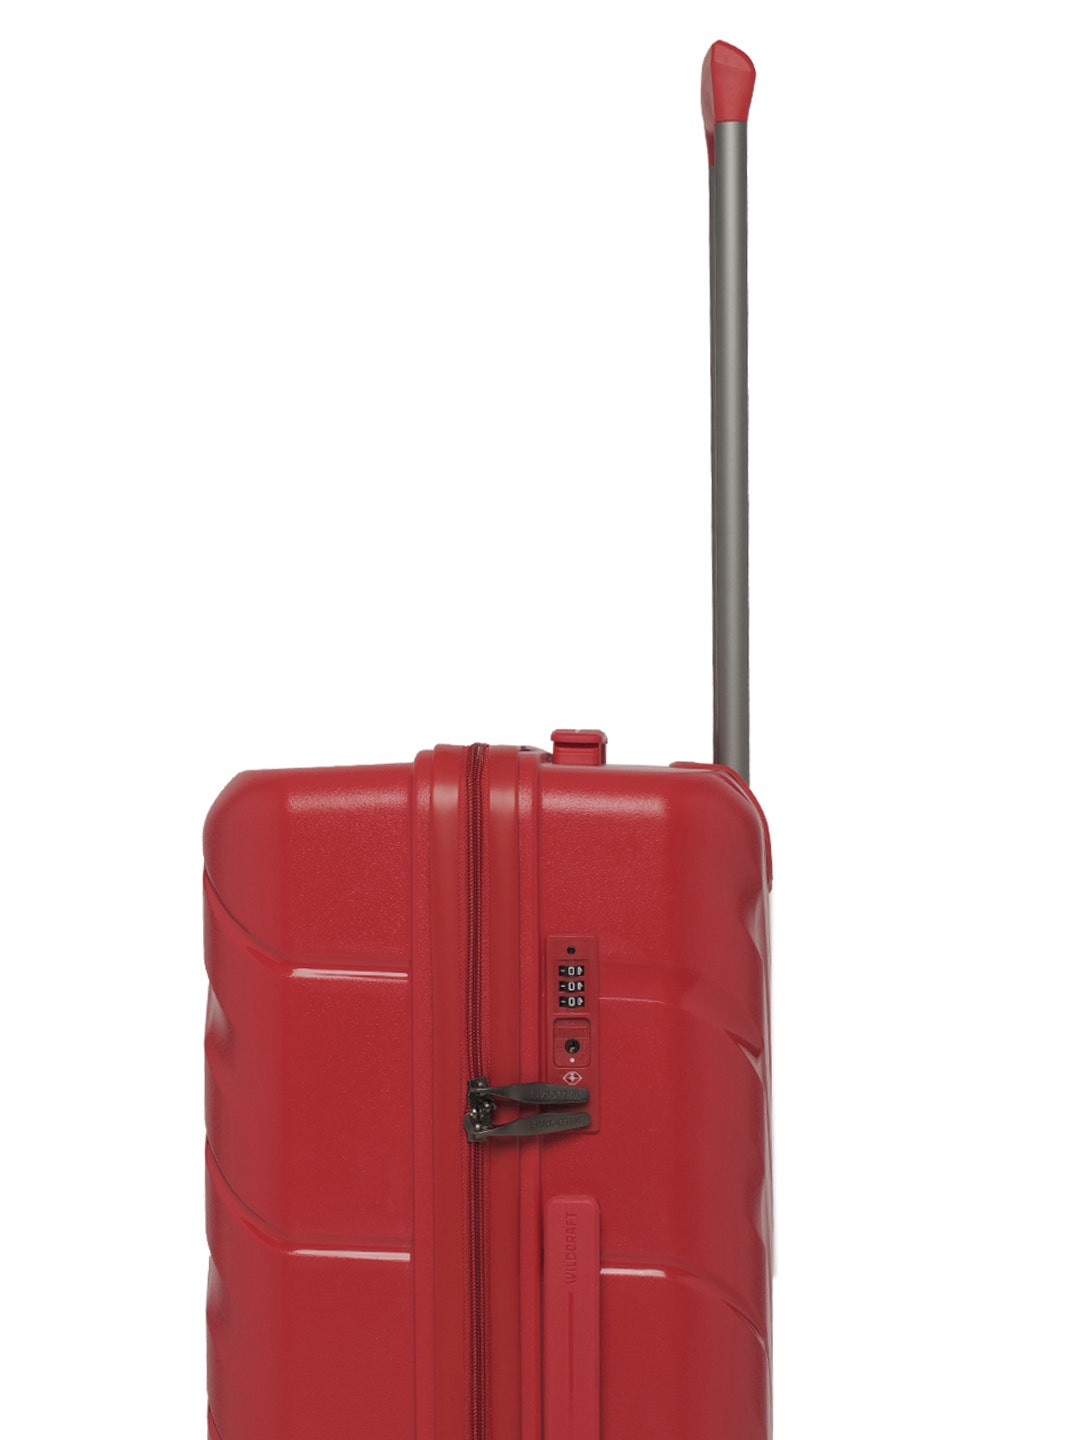 Wildcraft Columbus Hard Trolley Suitcase (12837)